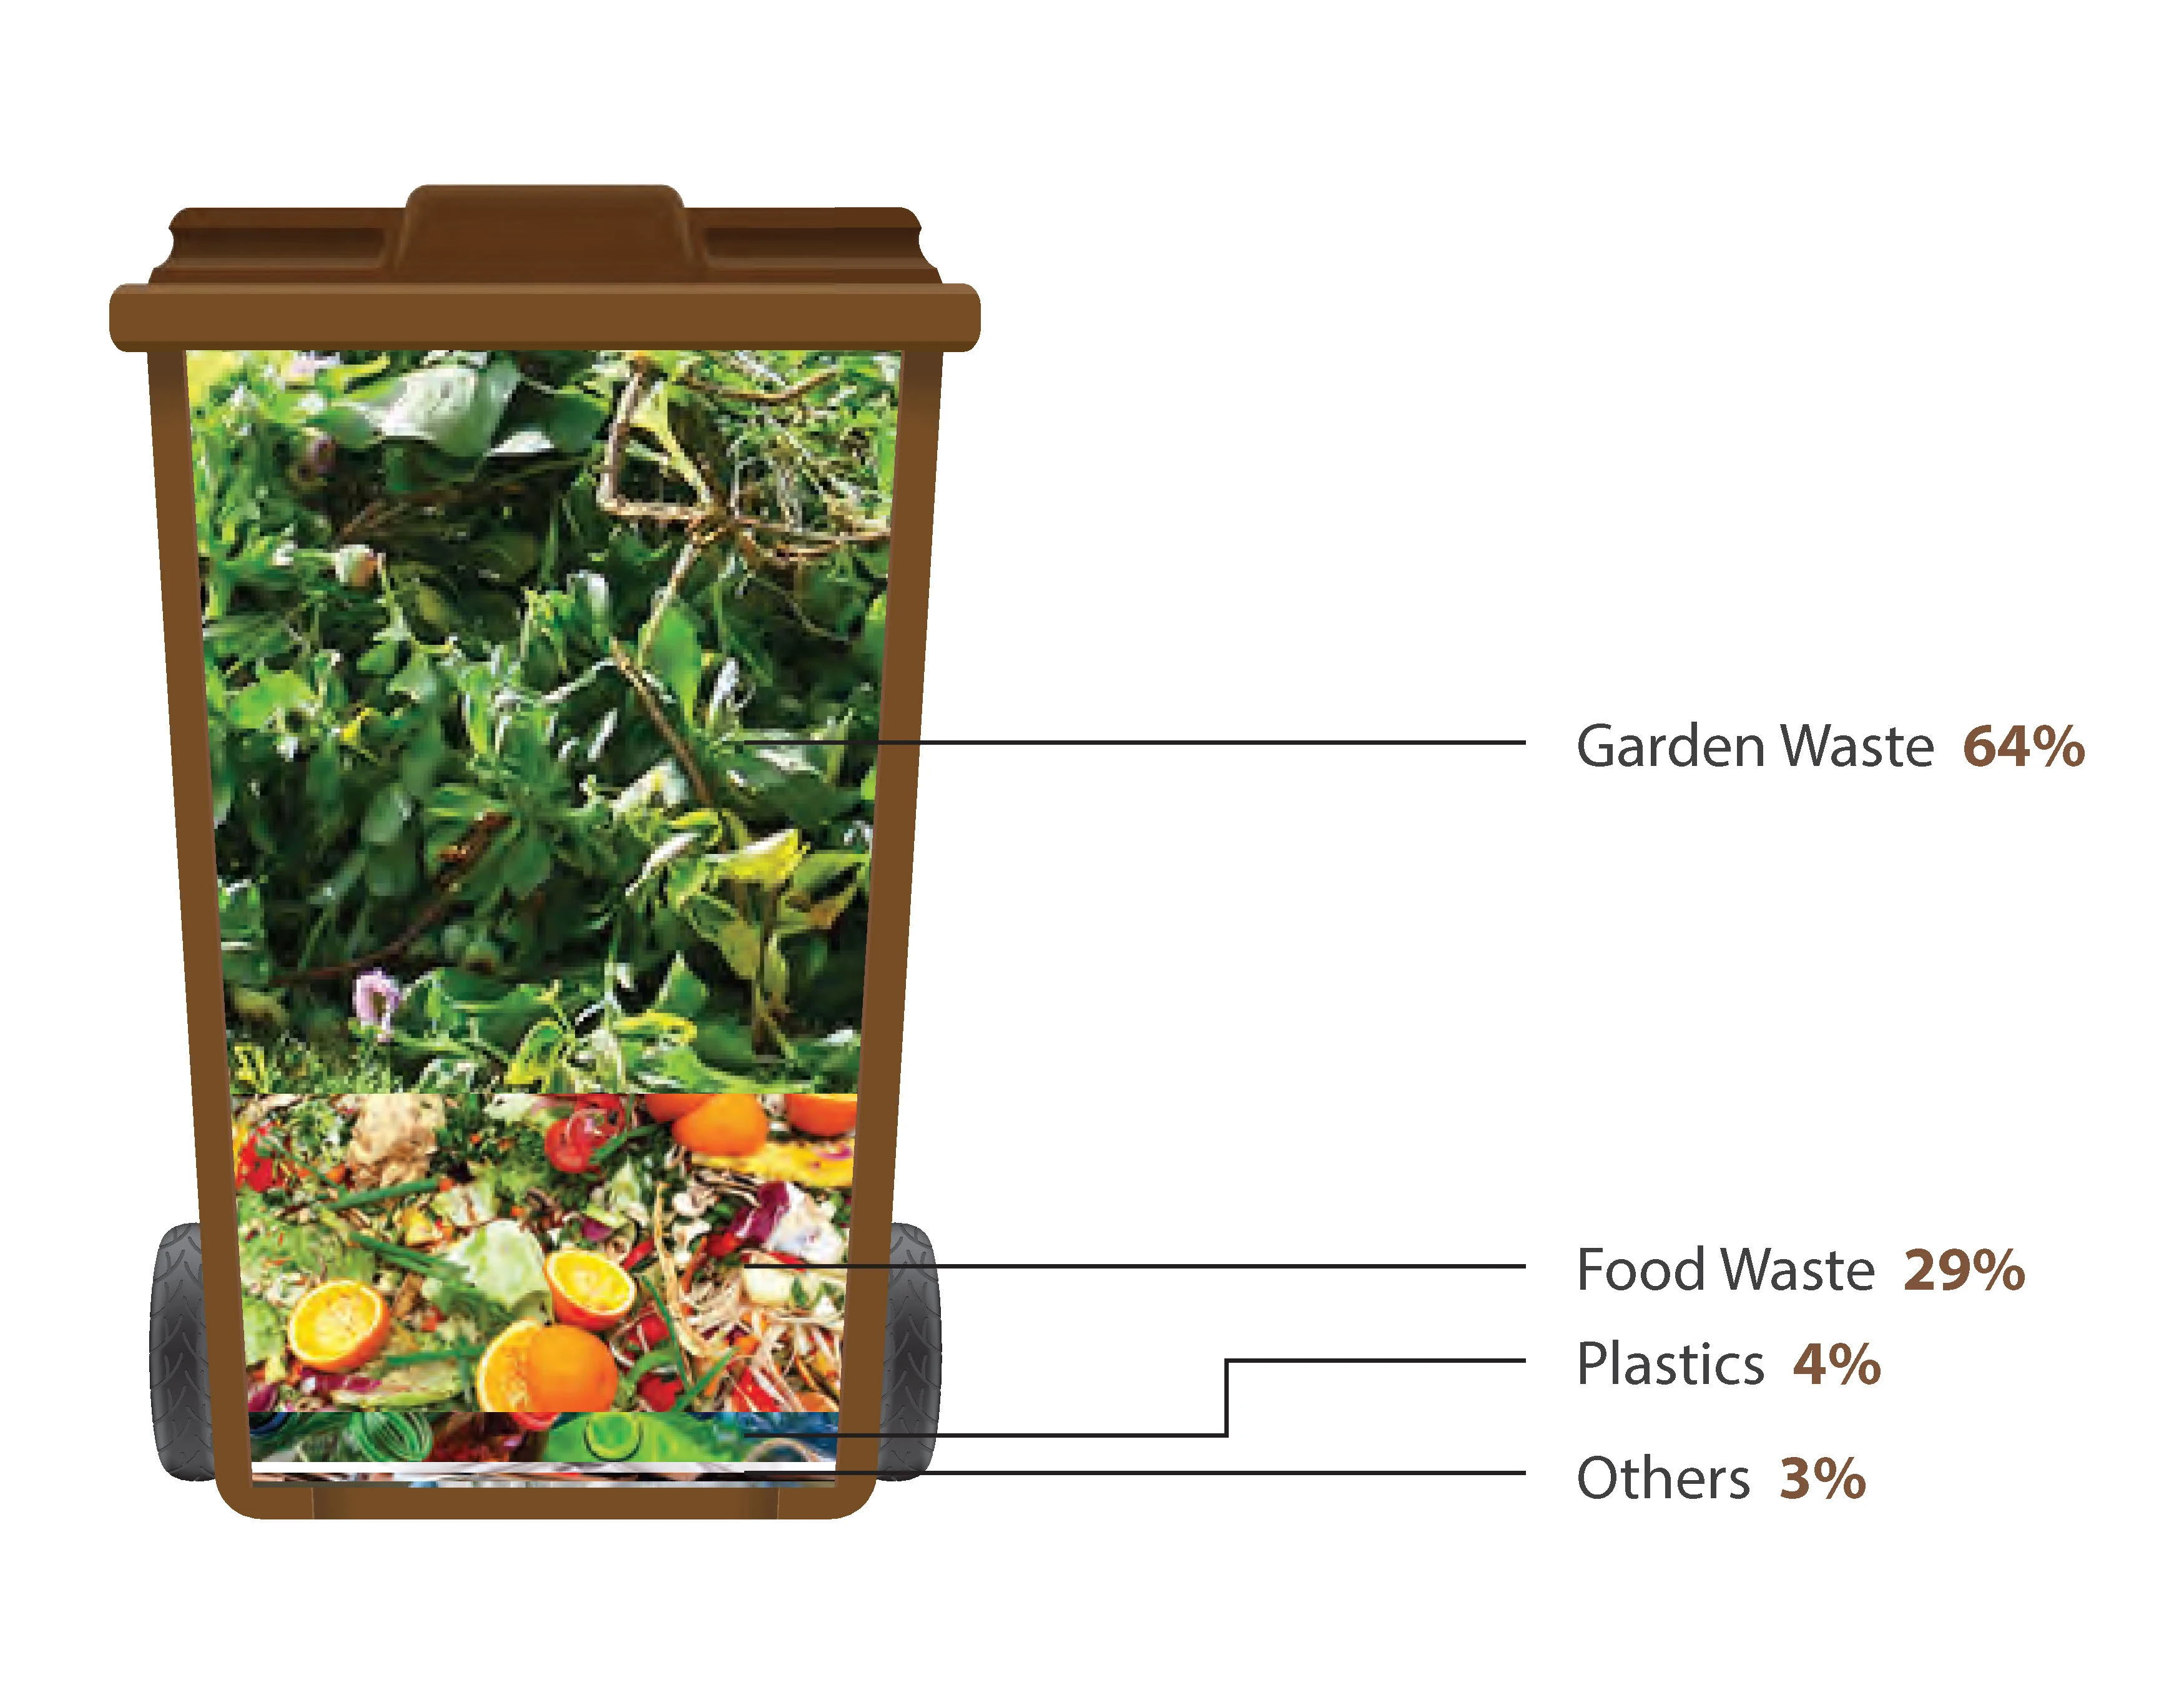 shows the breakdown of waste in the household organic bin